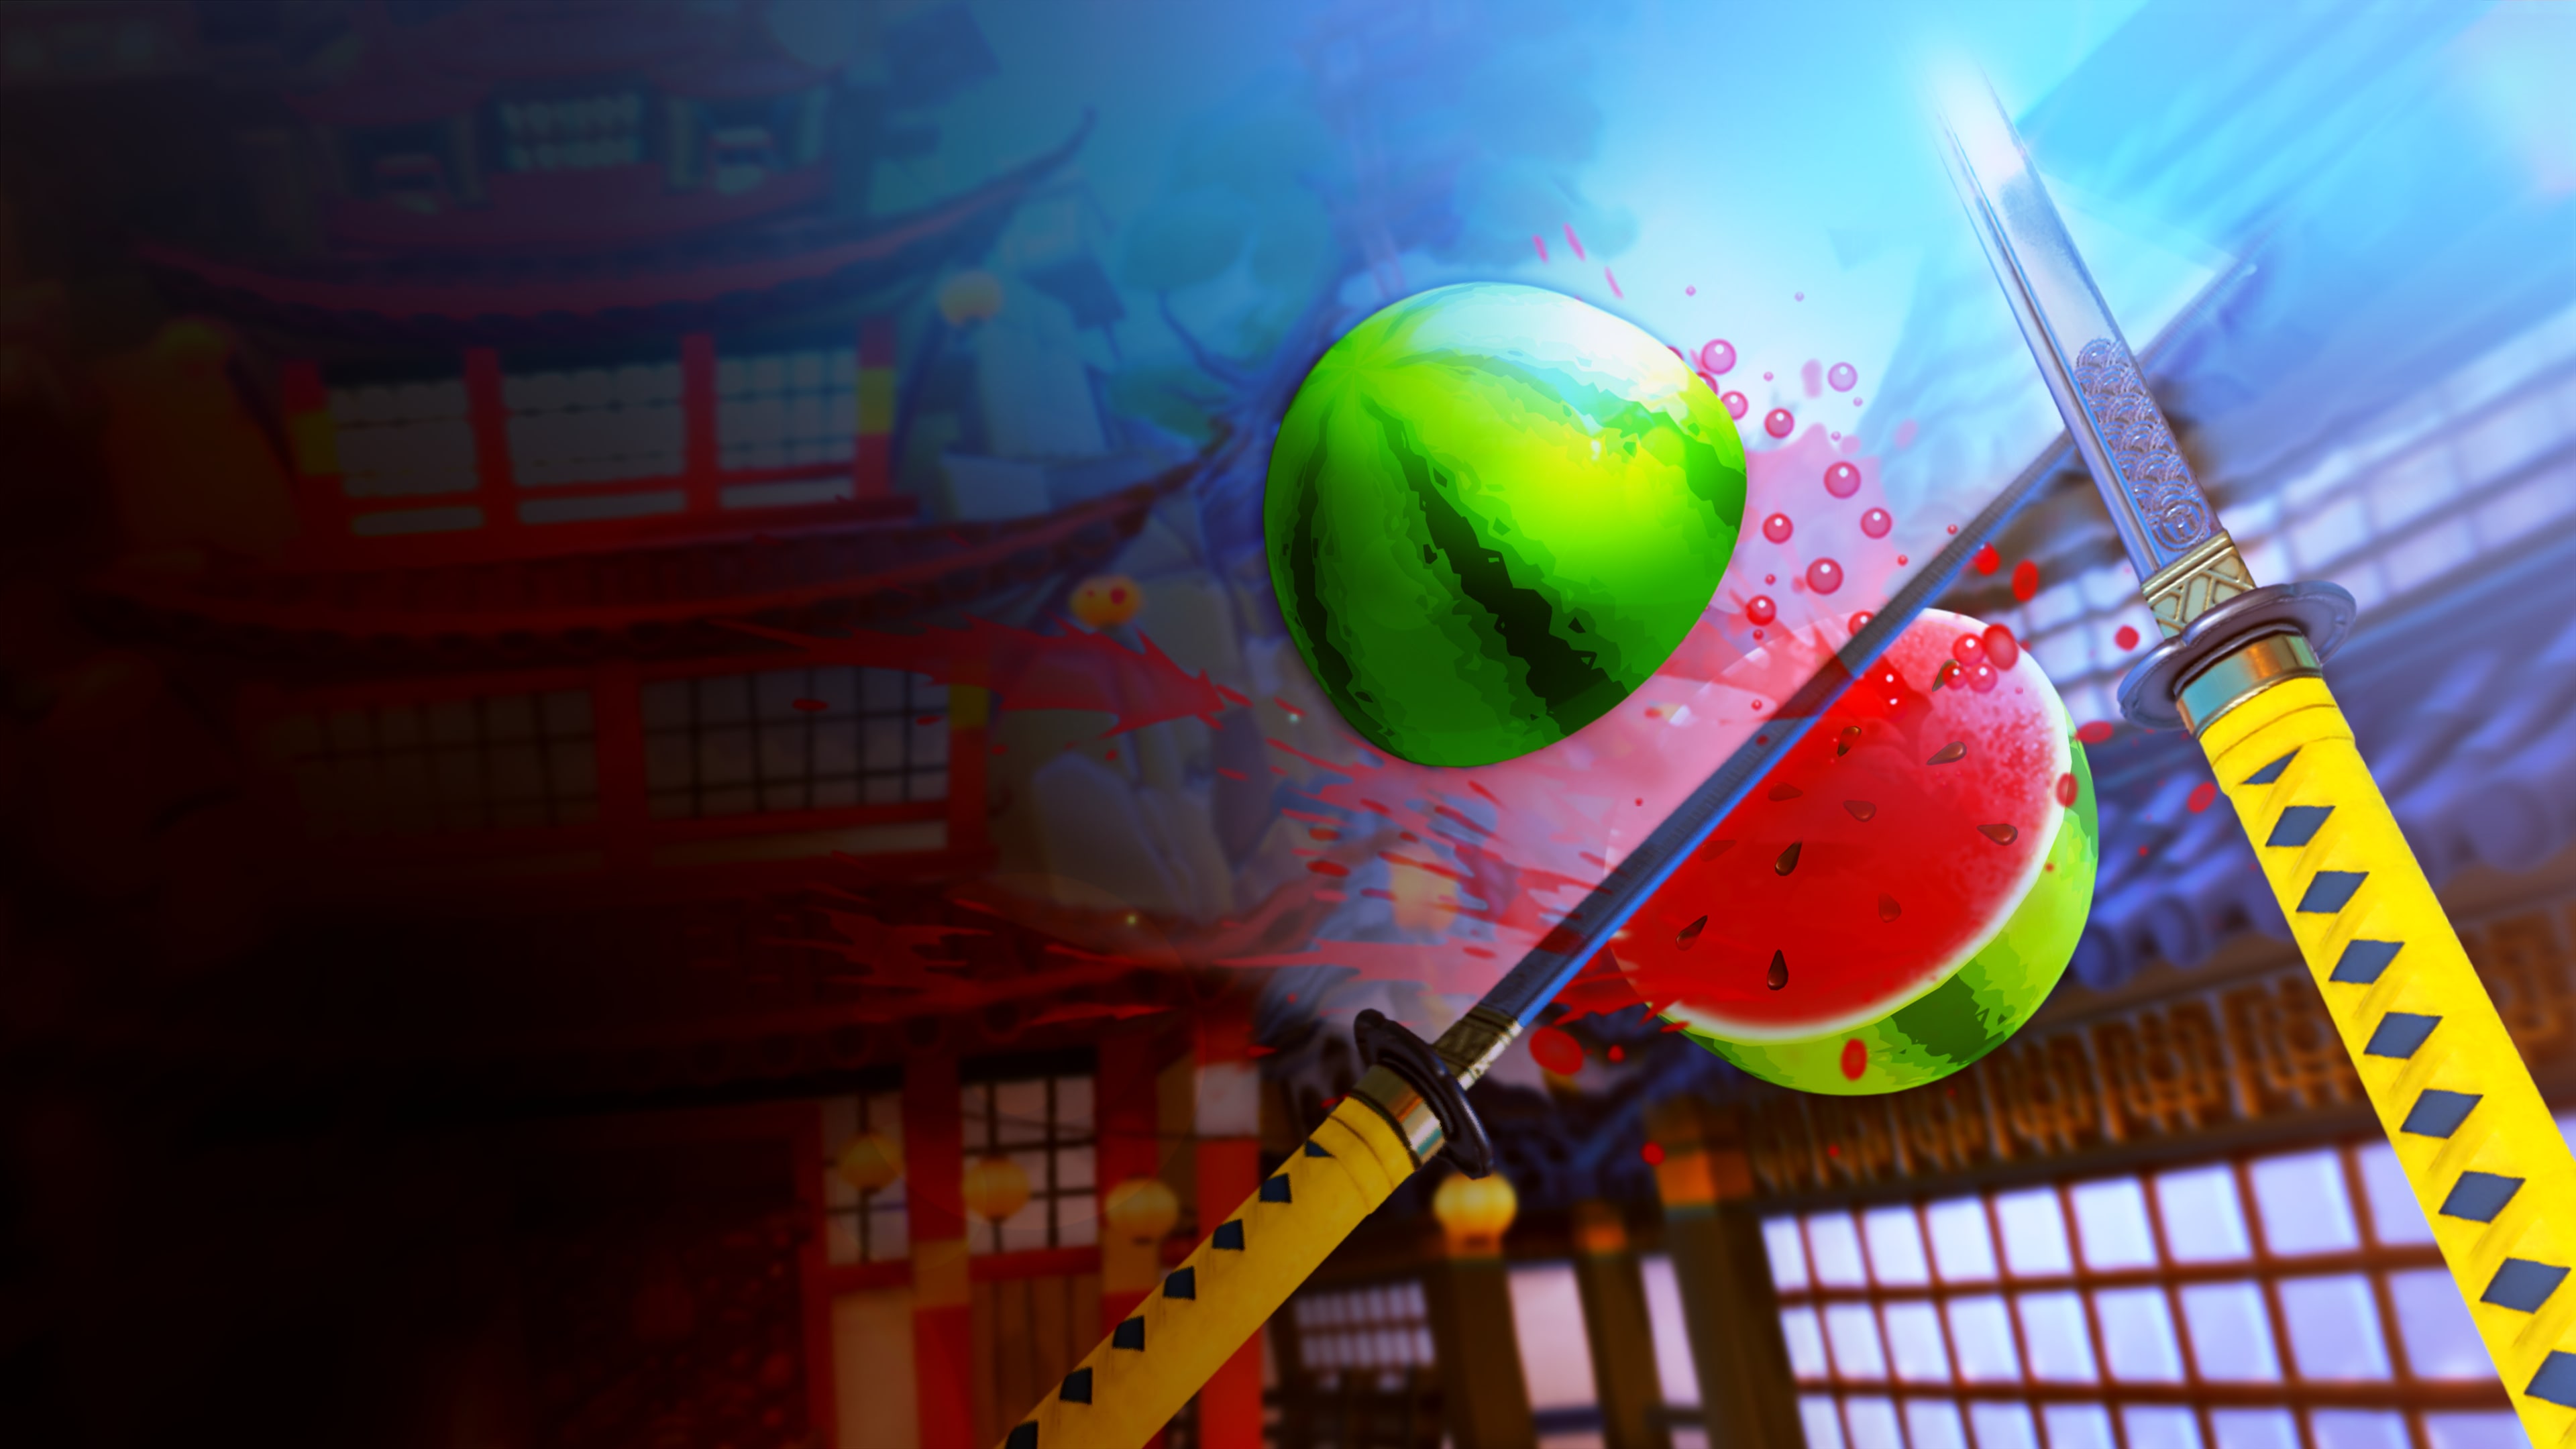 Play Fruit Ninja 🕹️ Game for Free at !